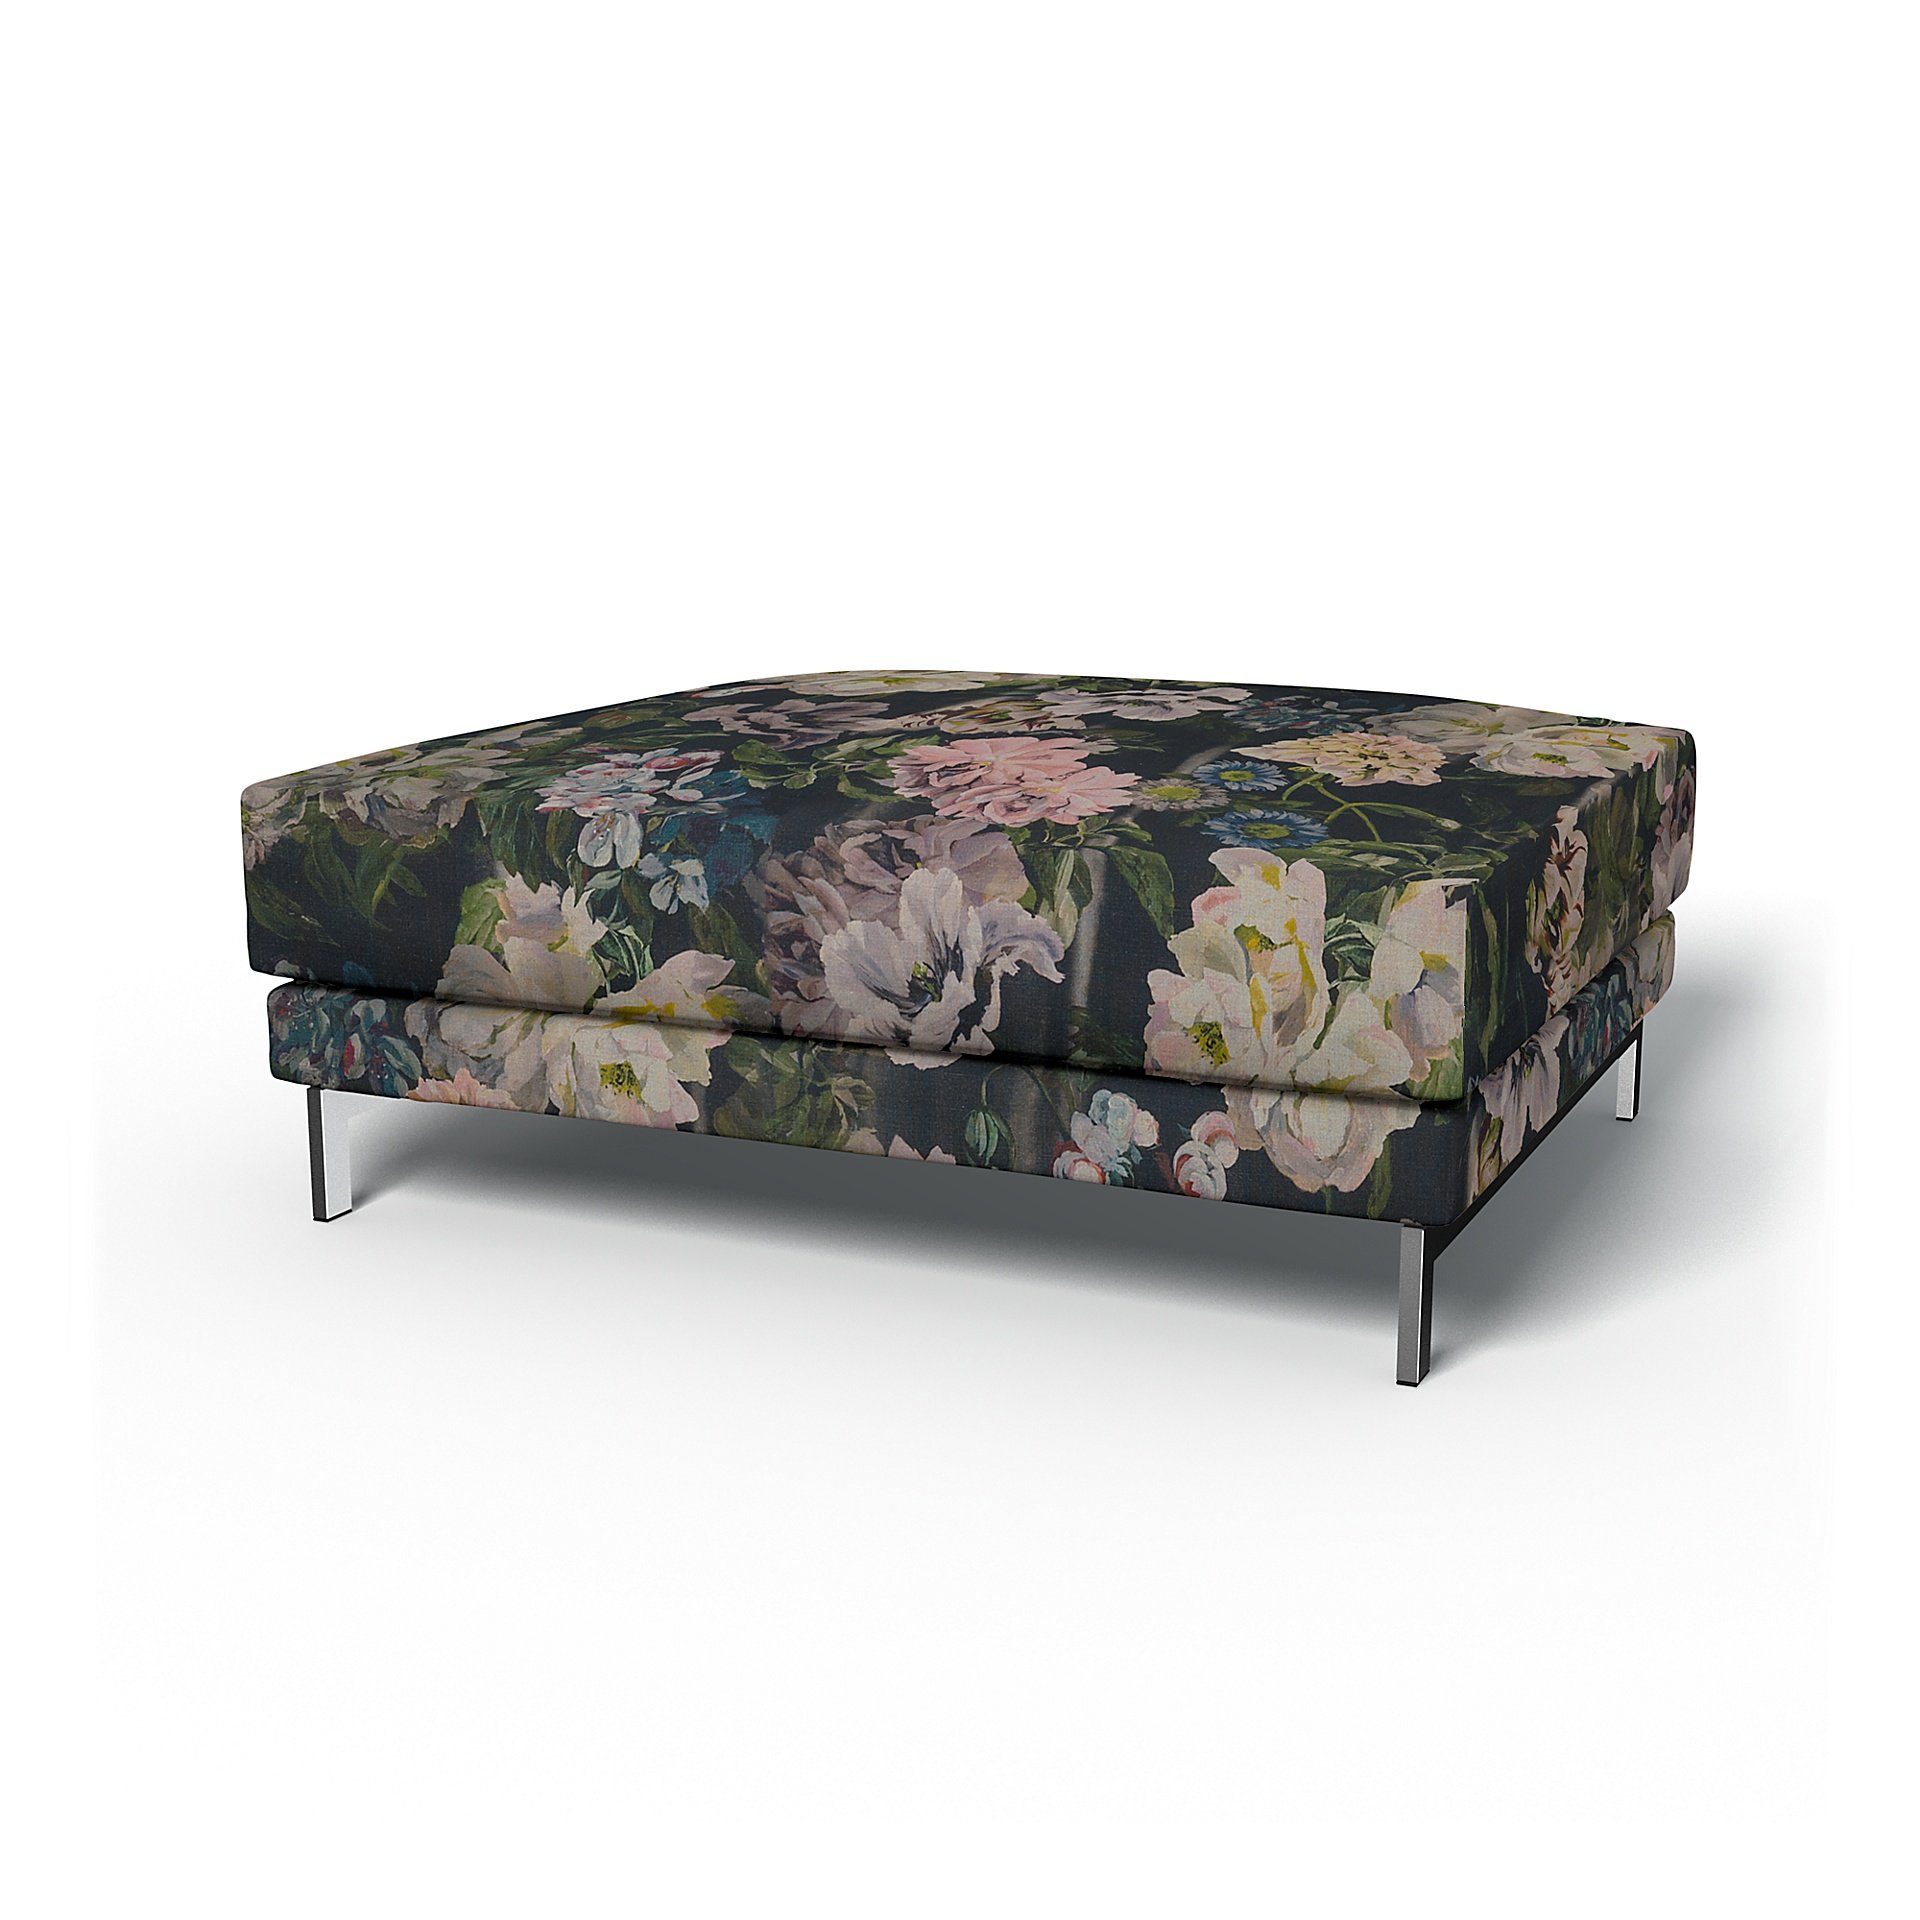 IKEA - Nockeby Footstool Cover, Delft Flower - Graphite, Linen - Bemz